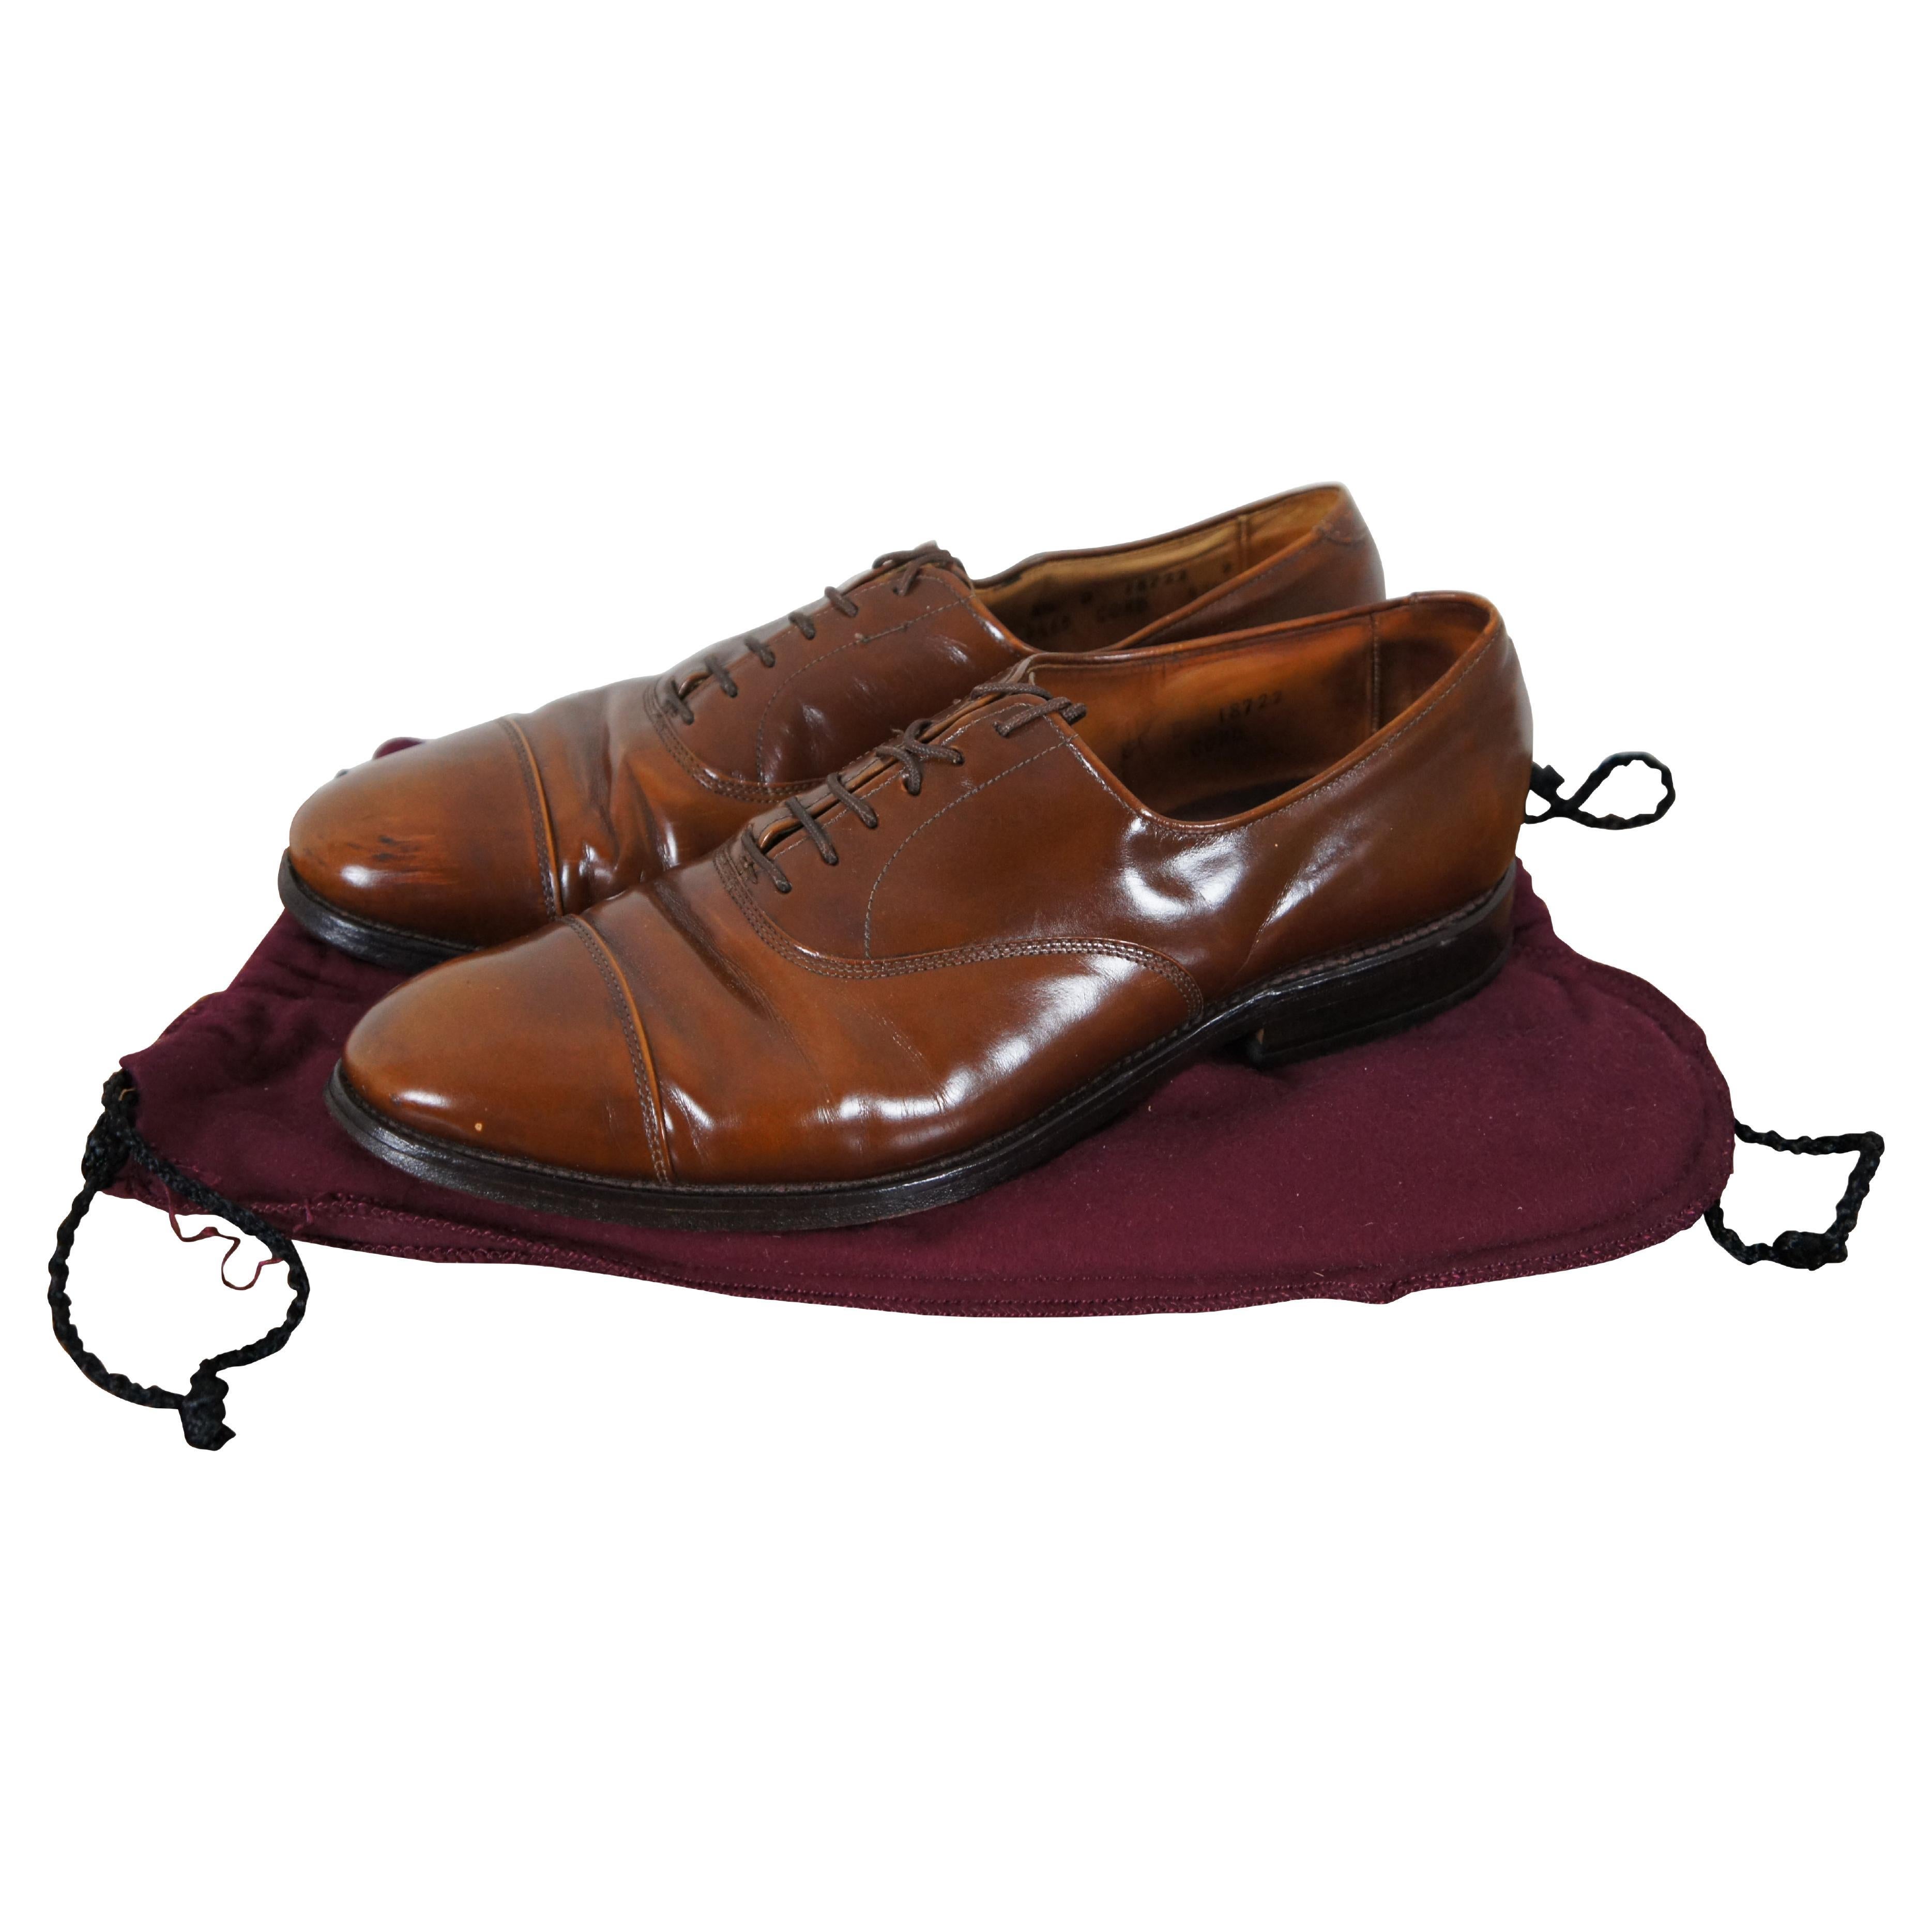 Allen Edmonds “Park Avenue” cap toe leather oxfords in walnut brown. Includes dust bags.

Dimensions

Size 8.5.